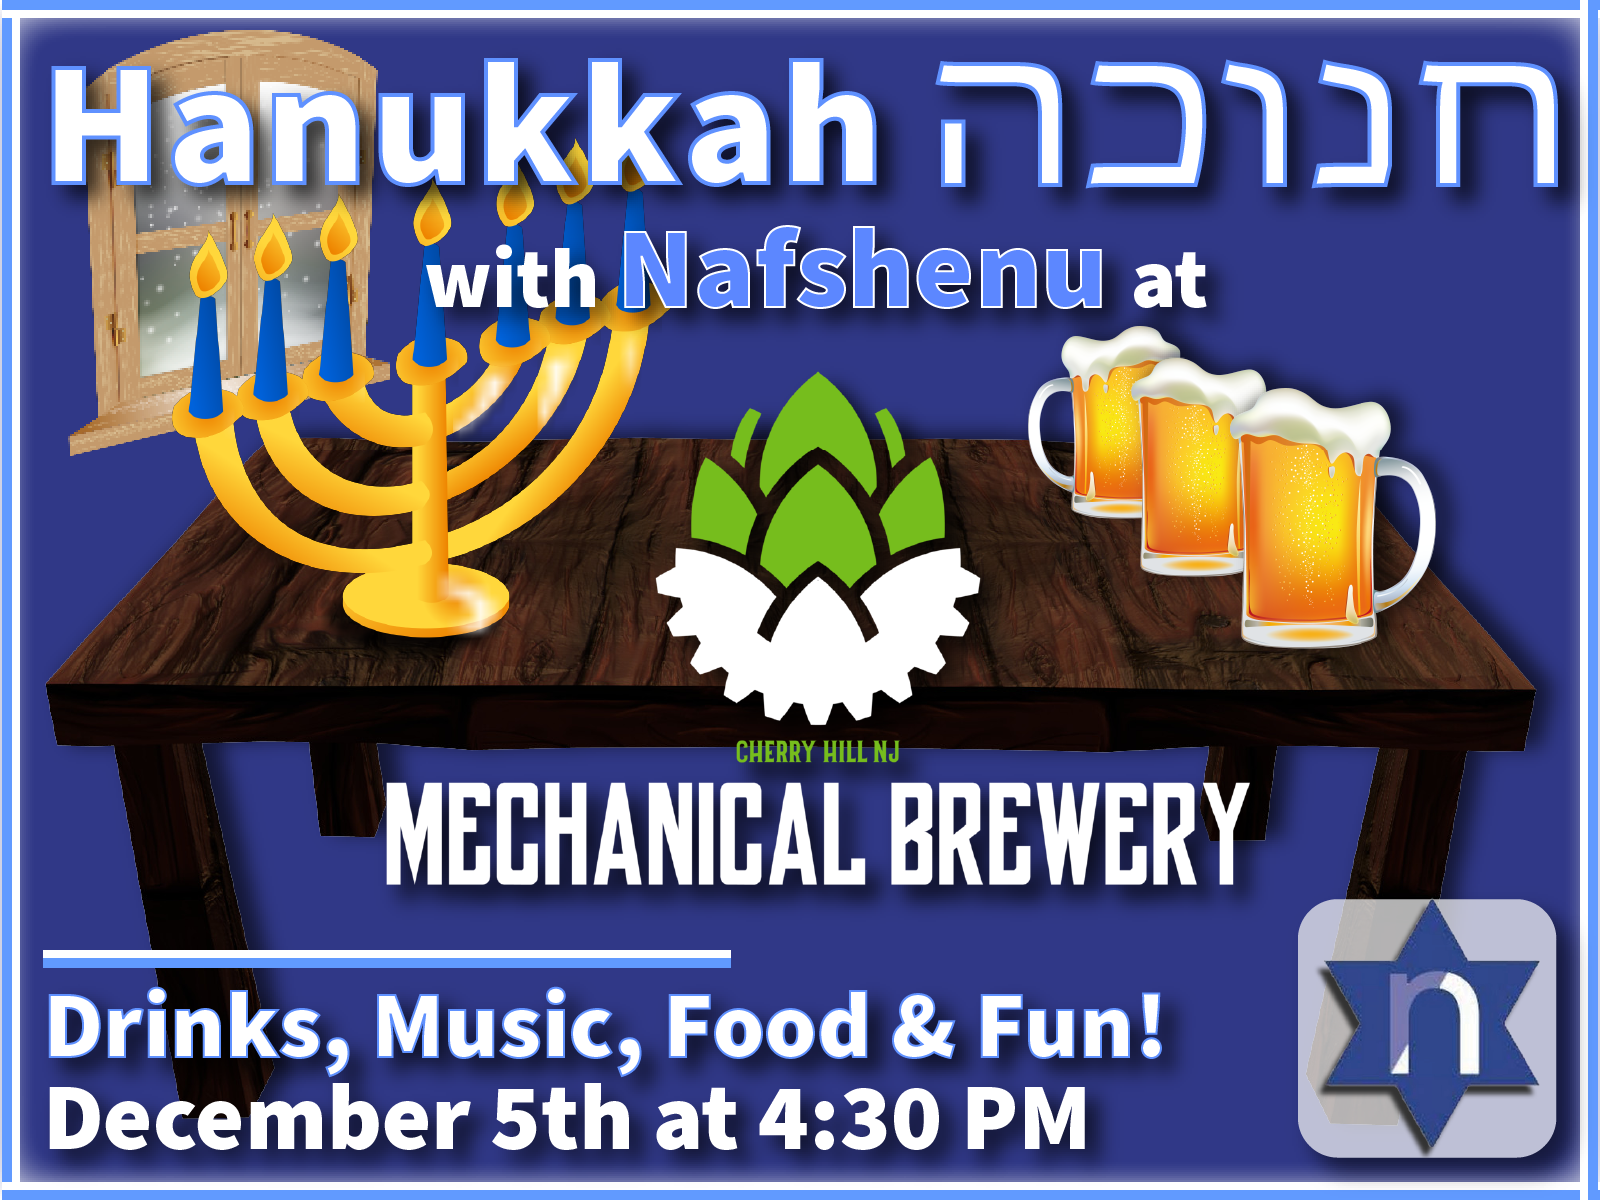 Hanukkah with Nafshenu at Mechanical Brewery